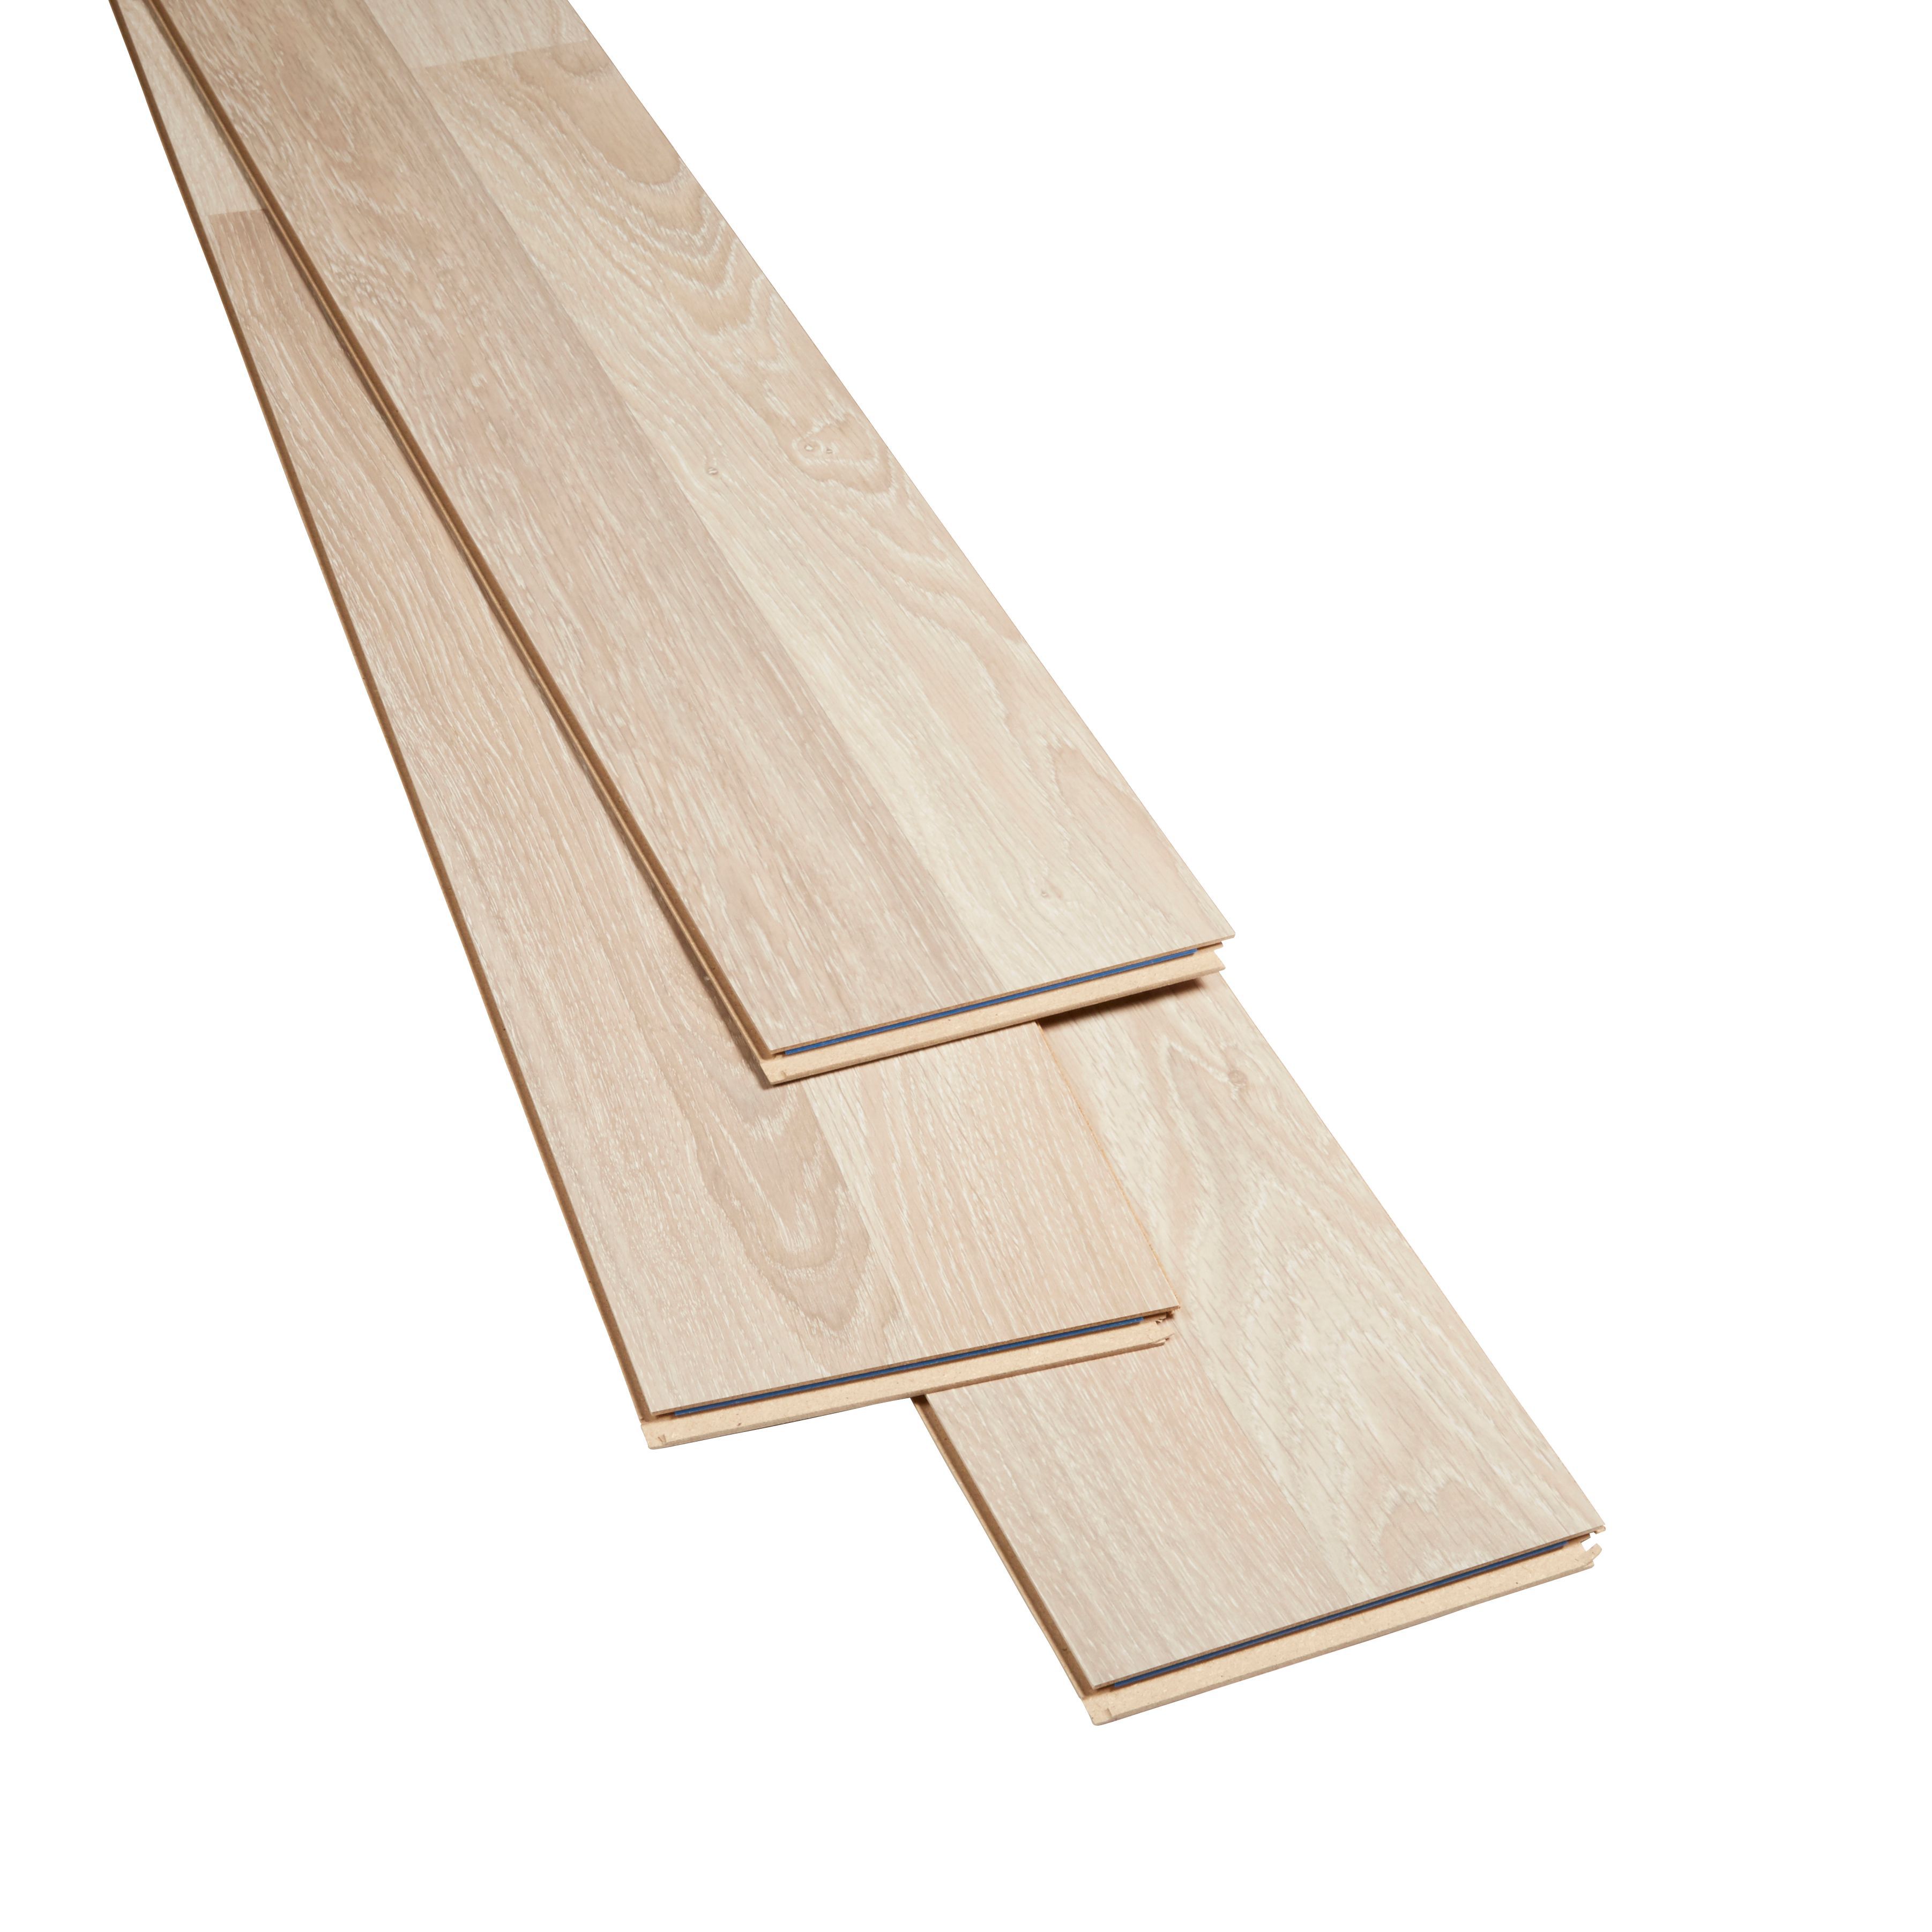 GoodHome Broome Oak effect Laminate Flooring, 2m²